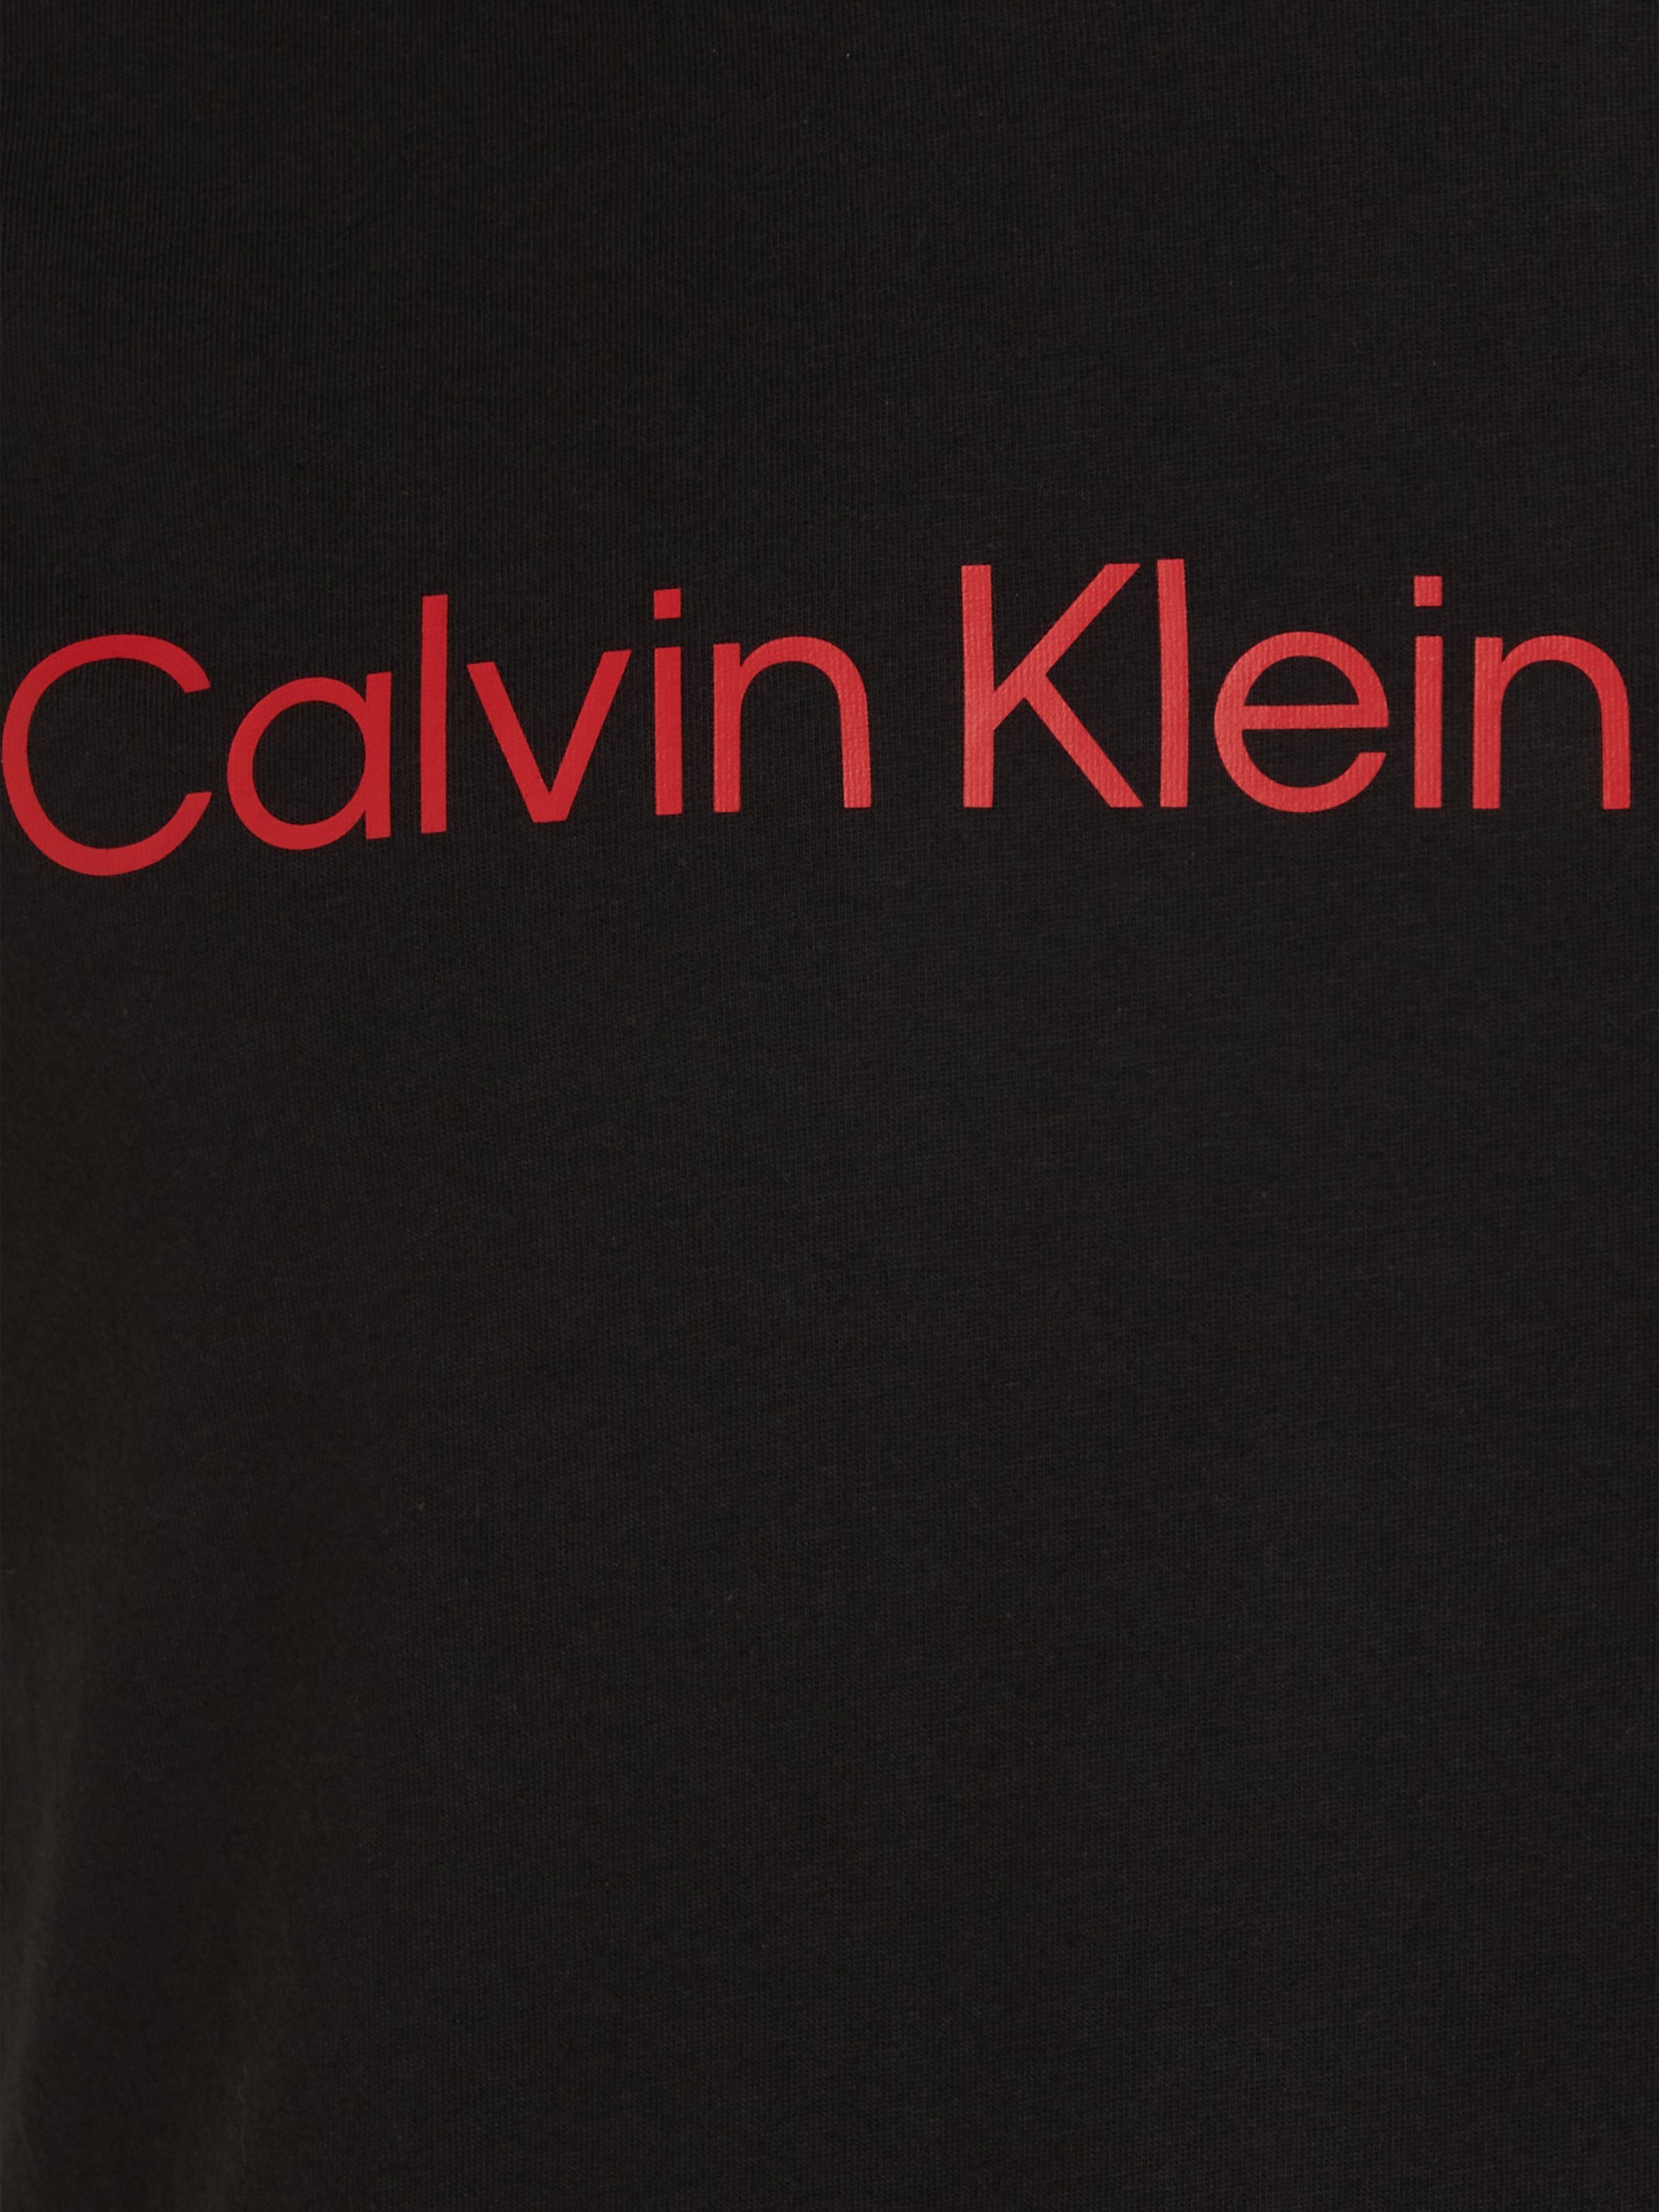 Calvin Klein Jeans T-Shirt Black Salsa Ck TEE INSTITUTIONAL CORE LOGO SLIM 